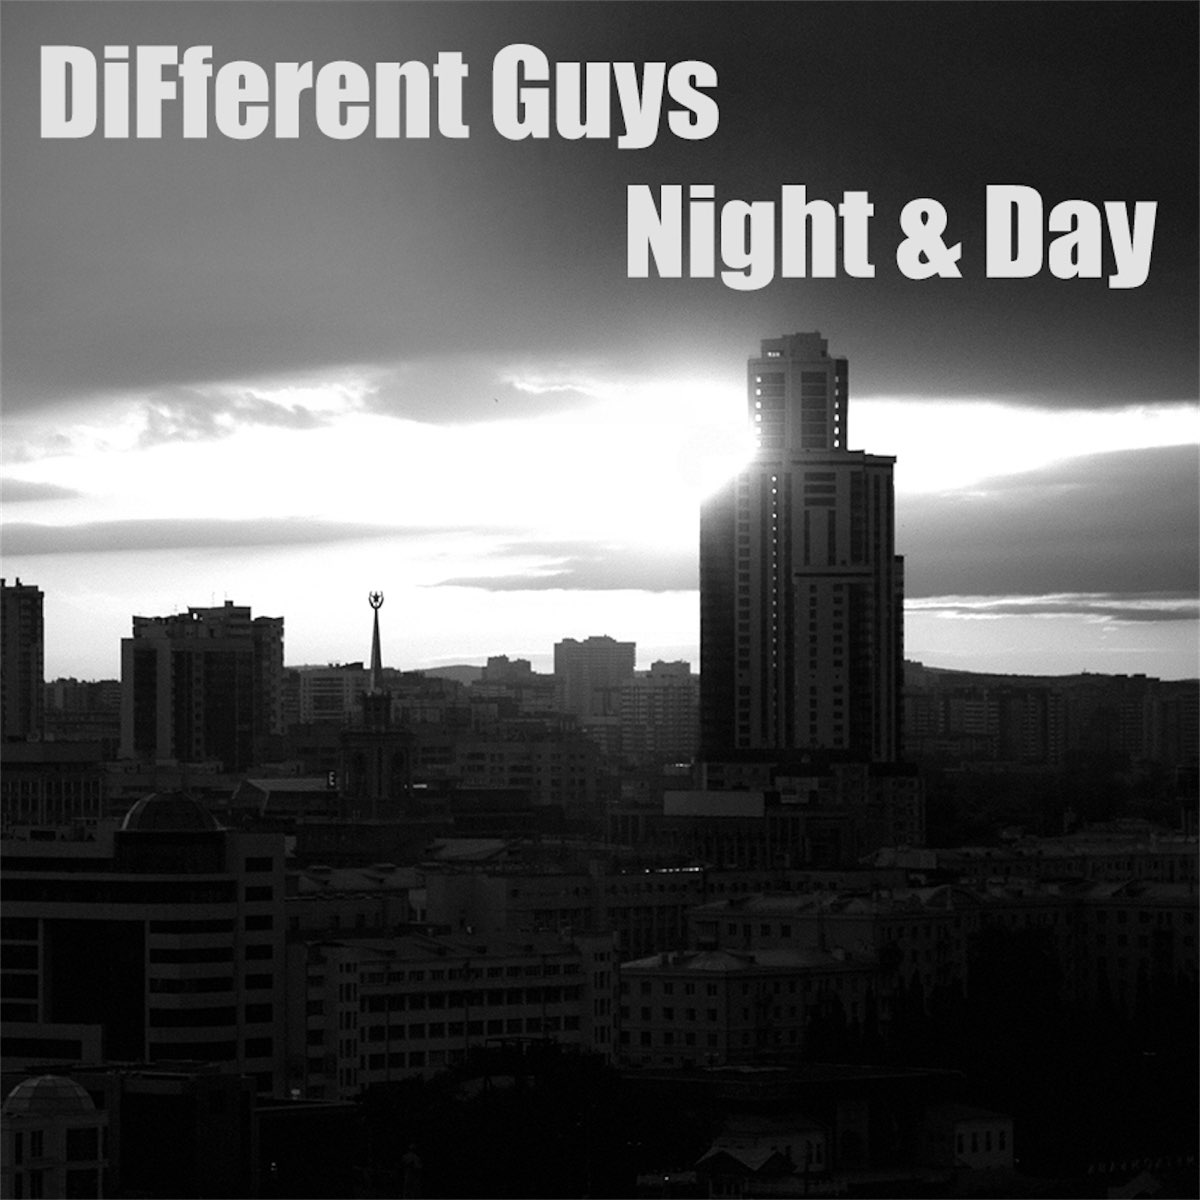 Different night. Night guy.